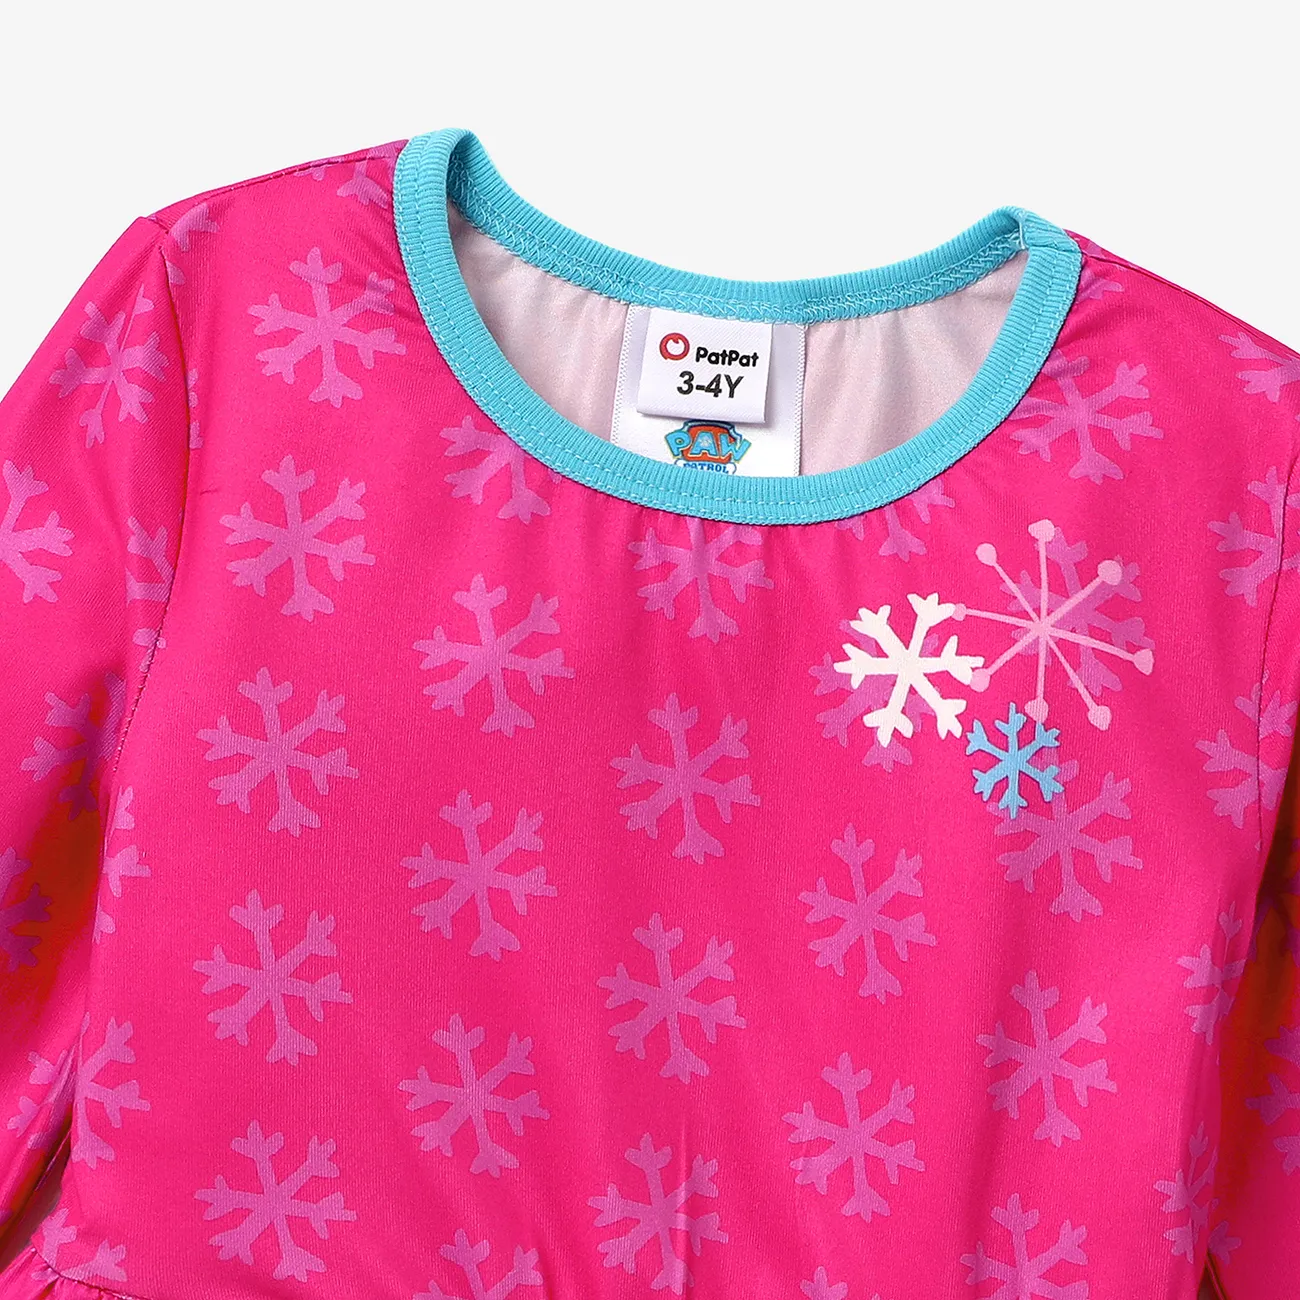 PAW Patrol Toddler Girl Christmas Character Print Long-sleeve Dress Hot Pink big image 1